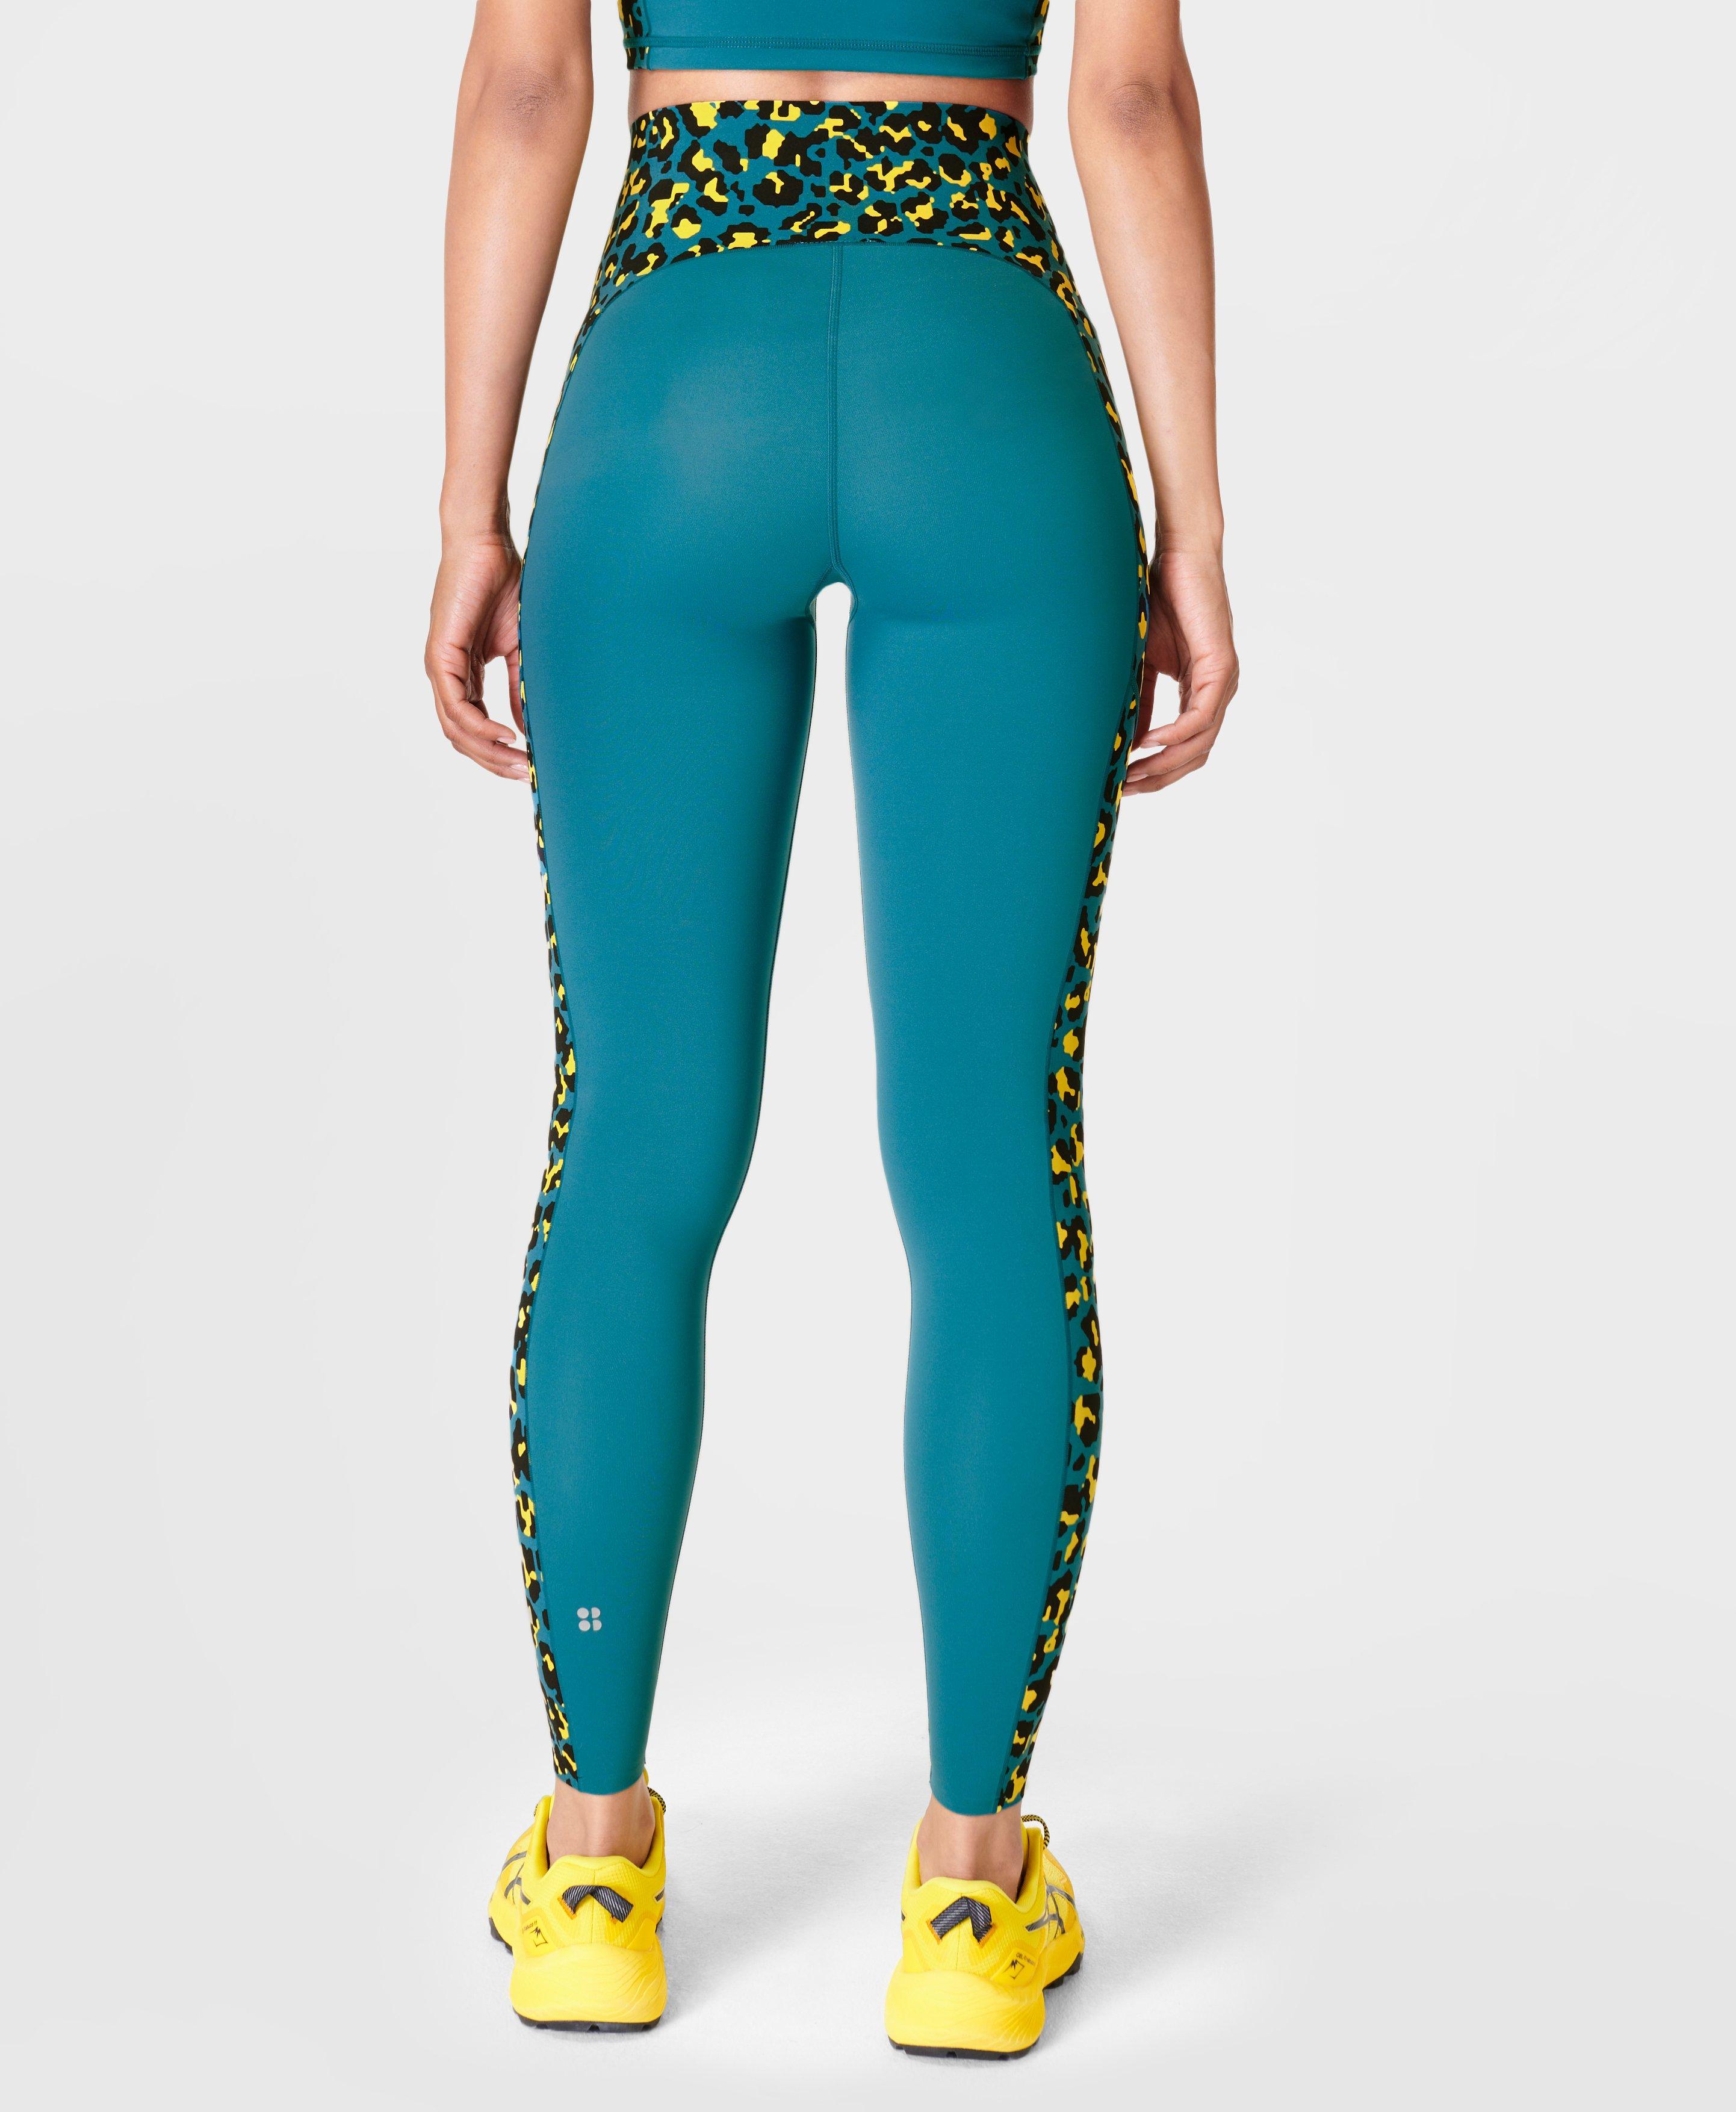 Power 7/8 Gym Leggings - Blue Pixel Leopard Print, Women's Leggings